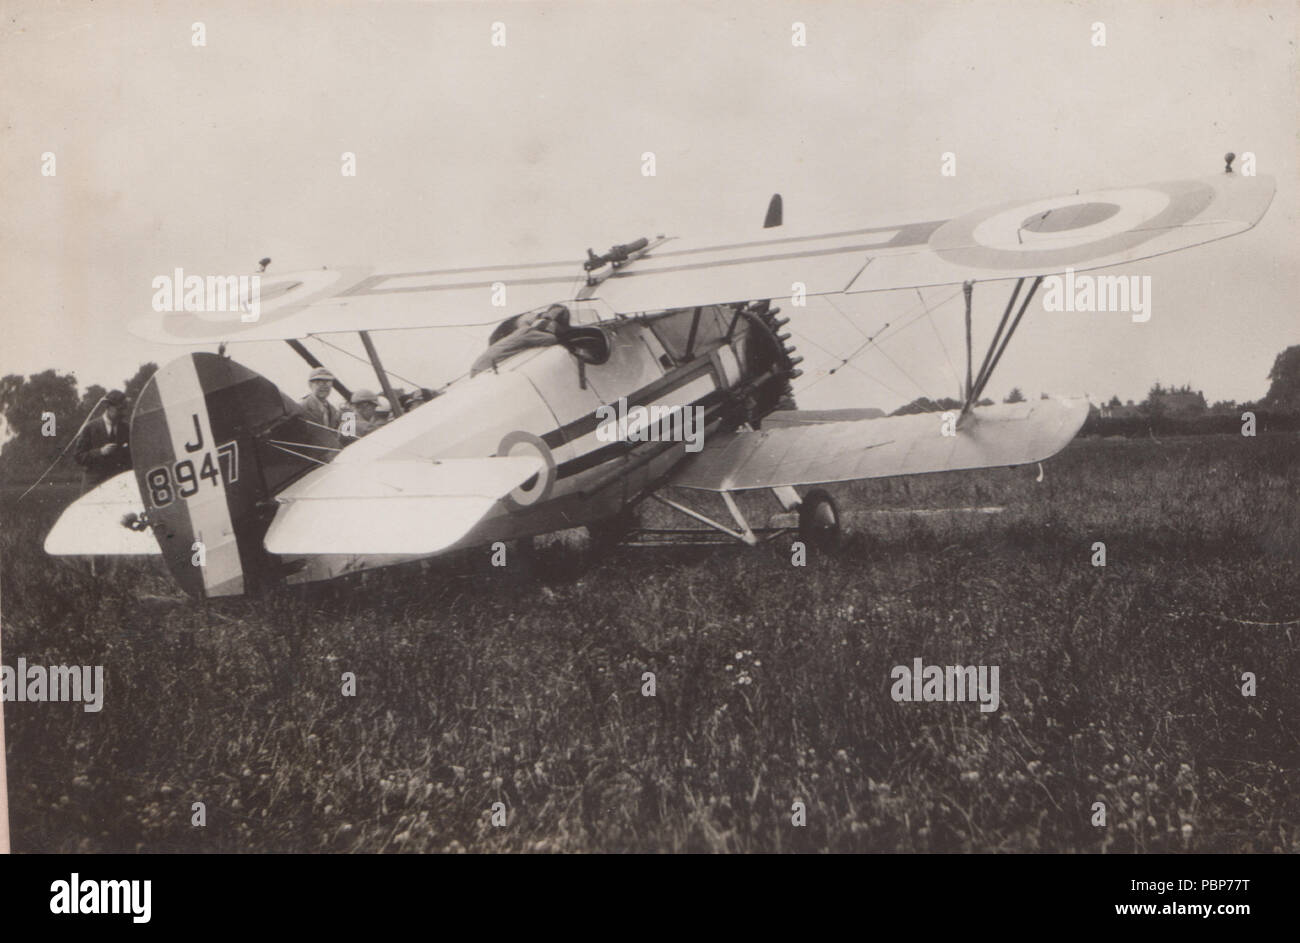 CDV (Carte De Visite) of a British Biplane. Marking of J8947 Stock Photo